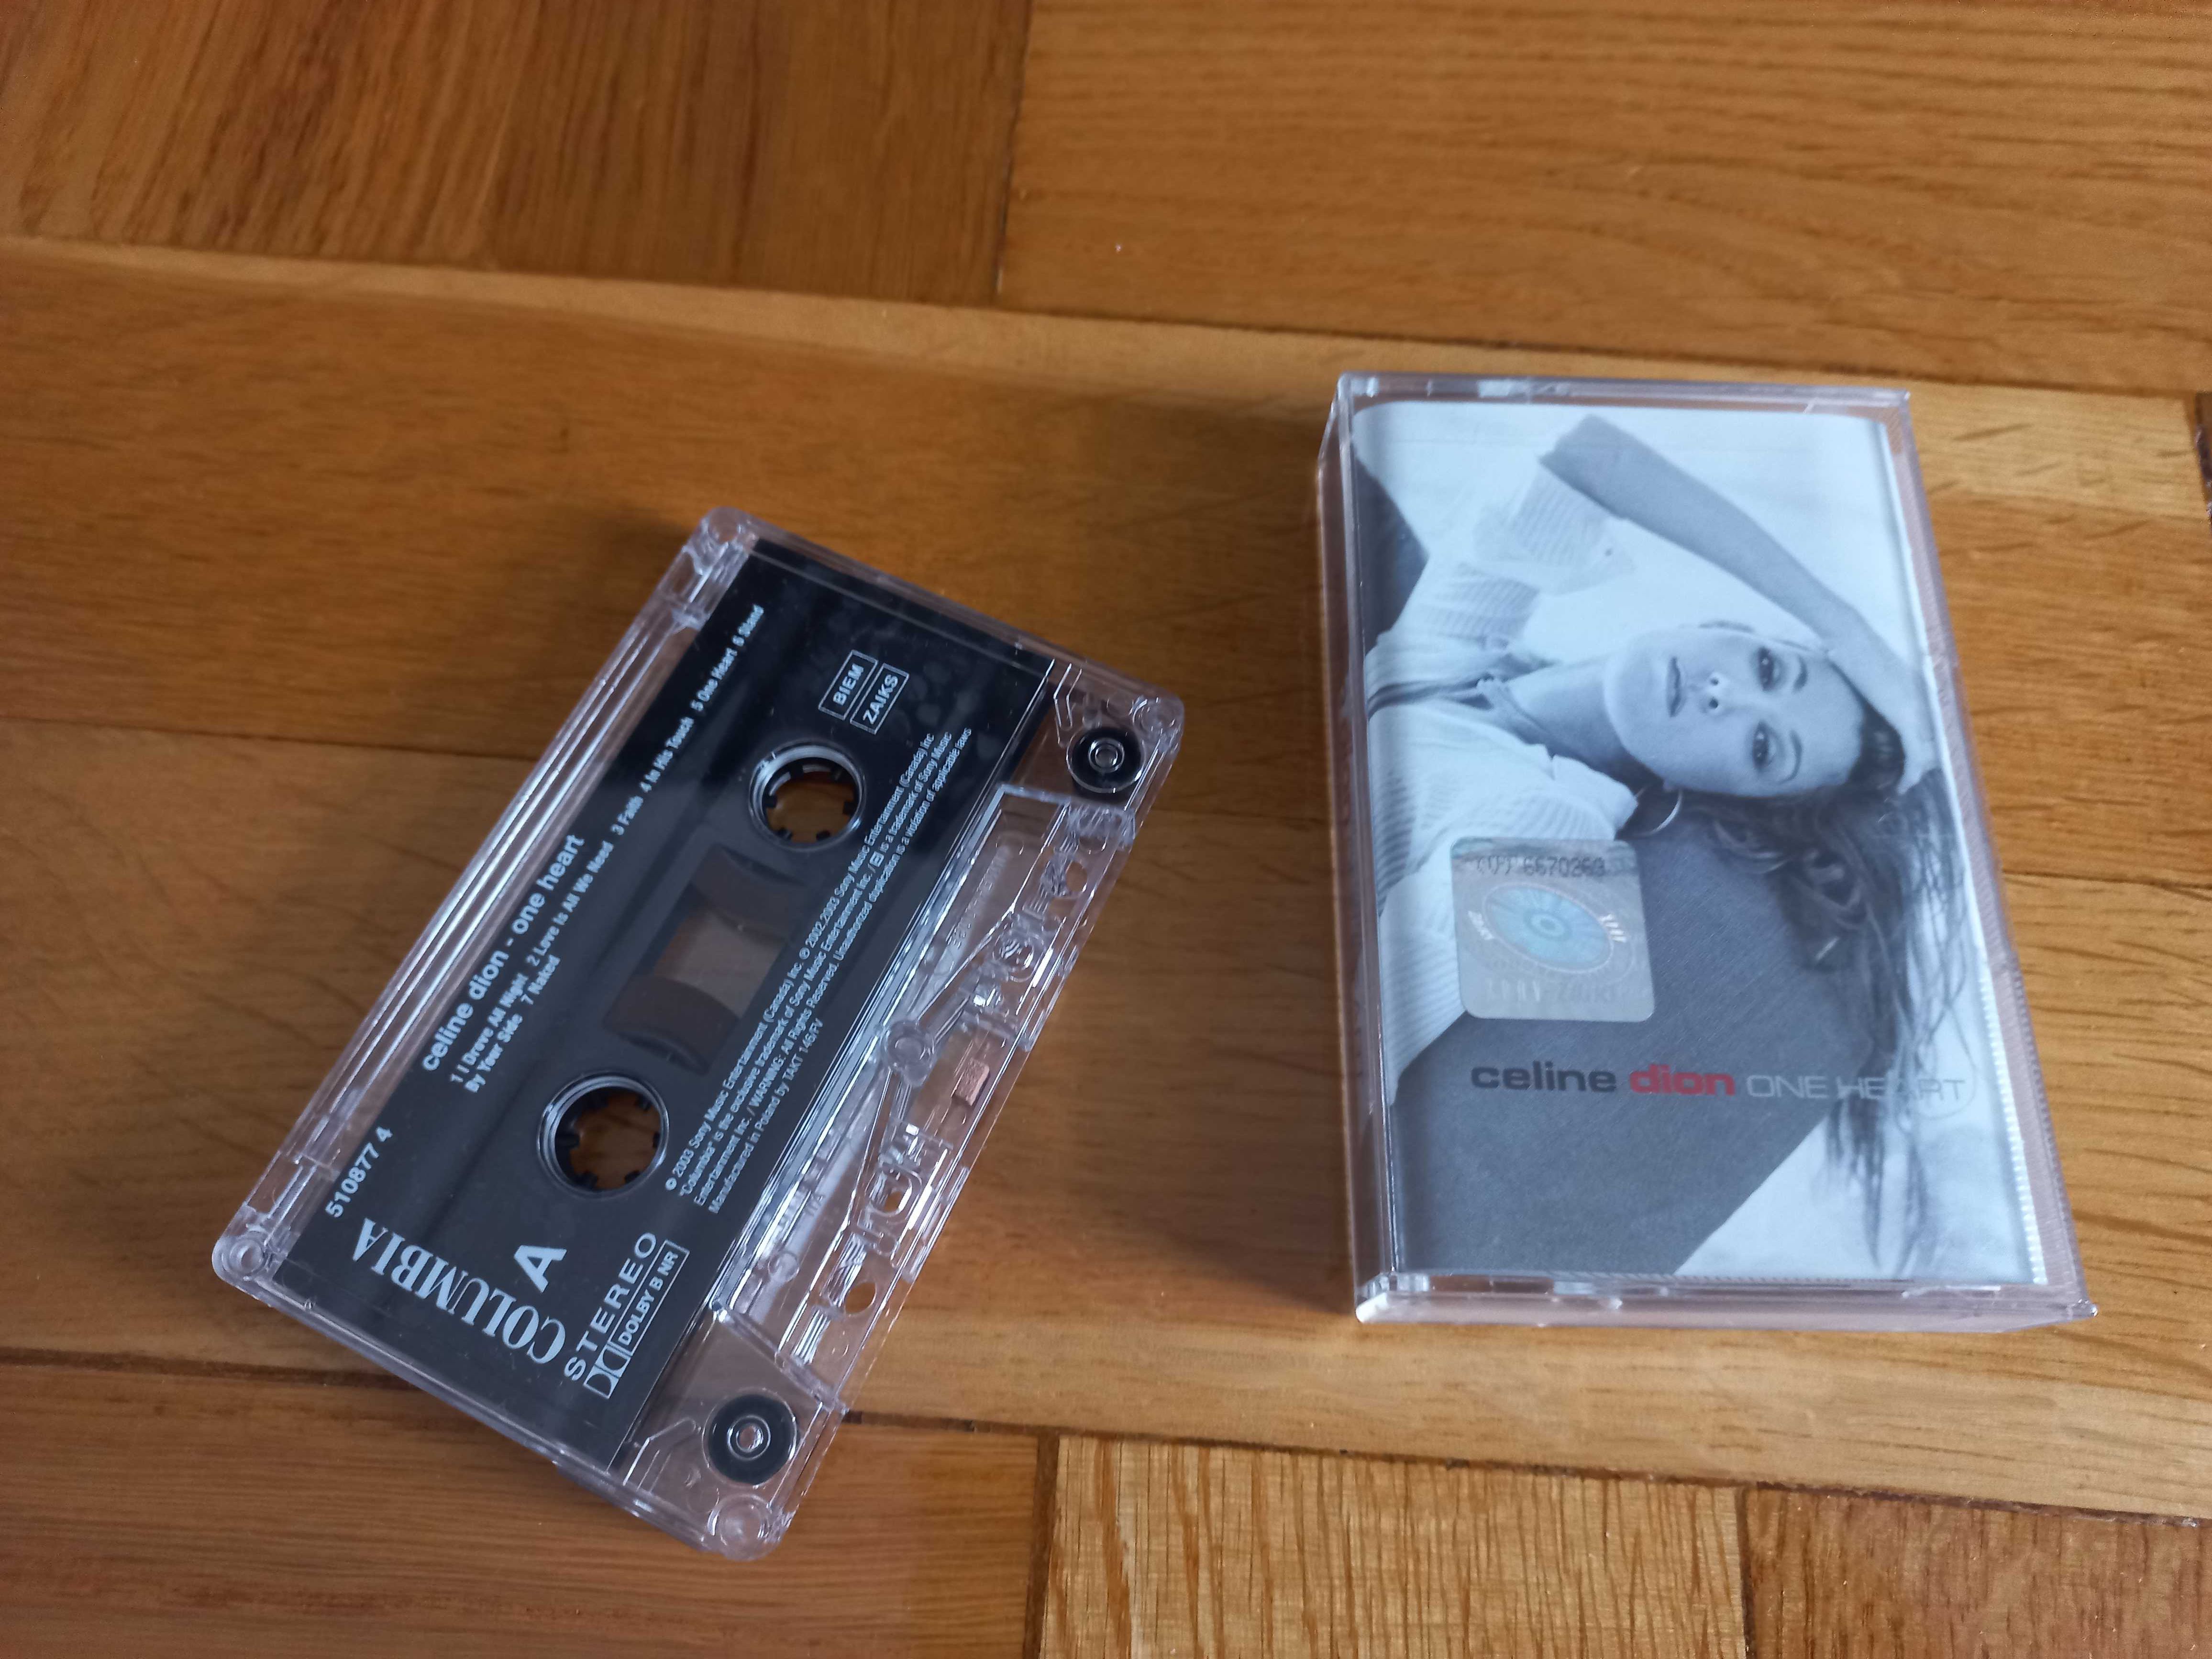 Celine Dion one heart kaseta